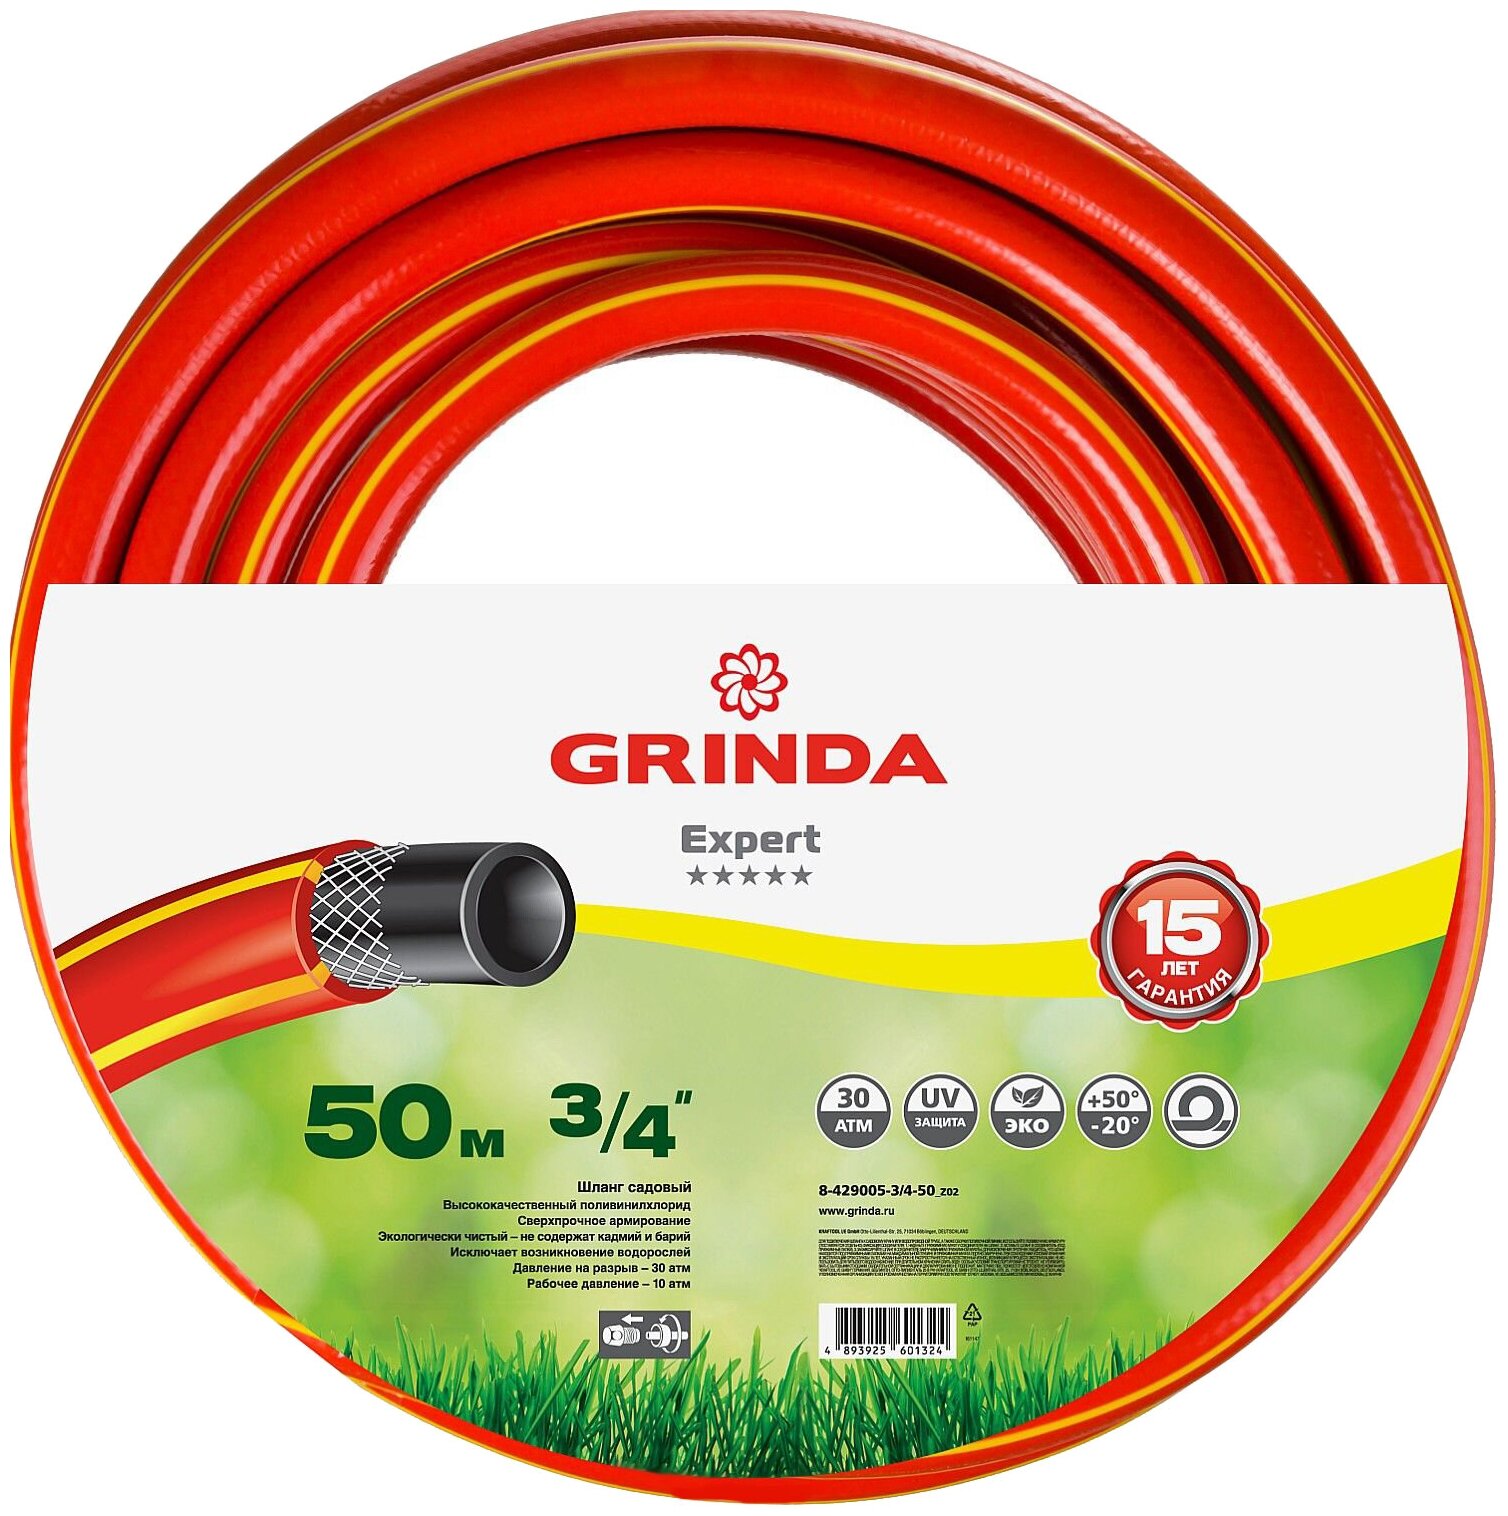   GRINDA PROLine EXPERT 3 , , 3_4 , 50